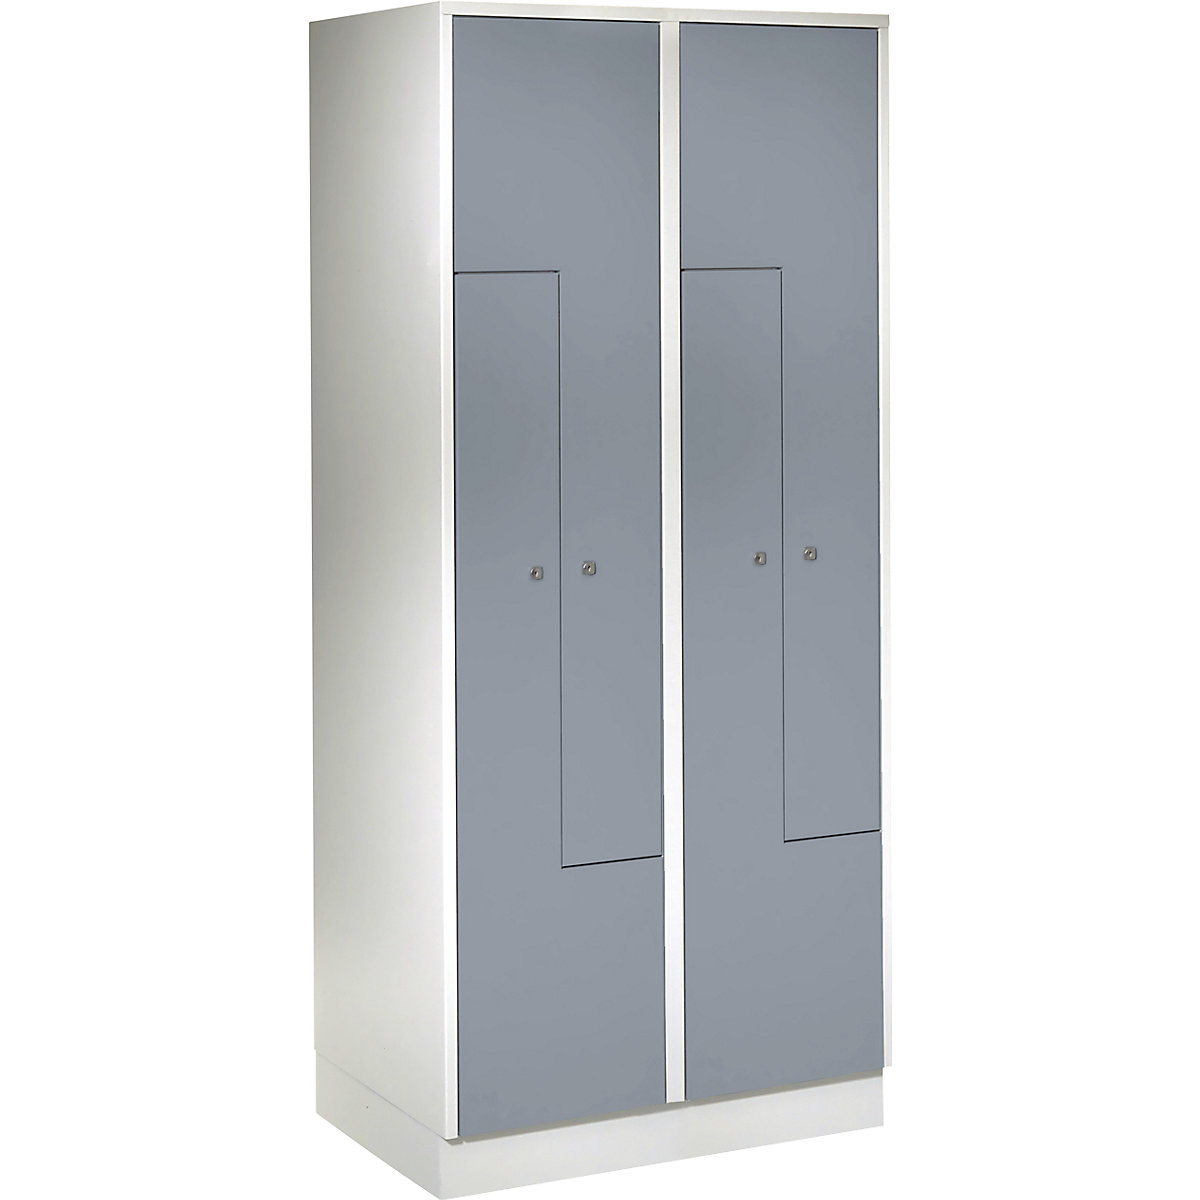 Z cloakroom locker – Wolf, 4 compartments, doors silver grey-17